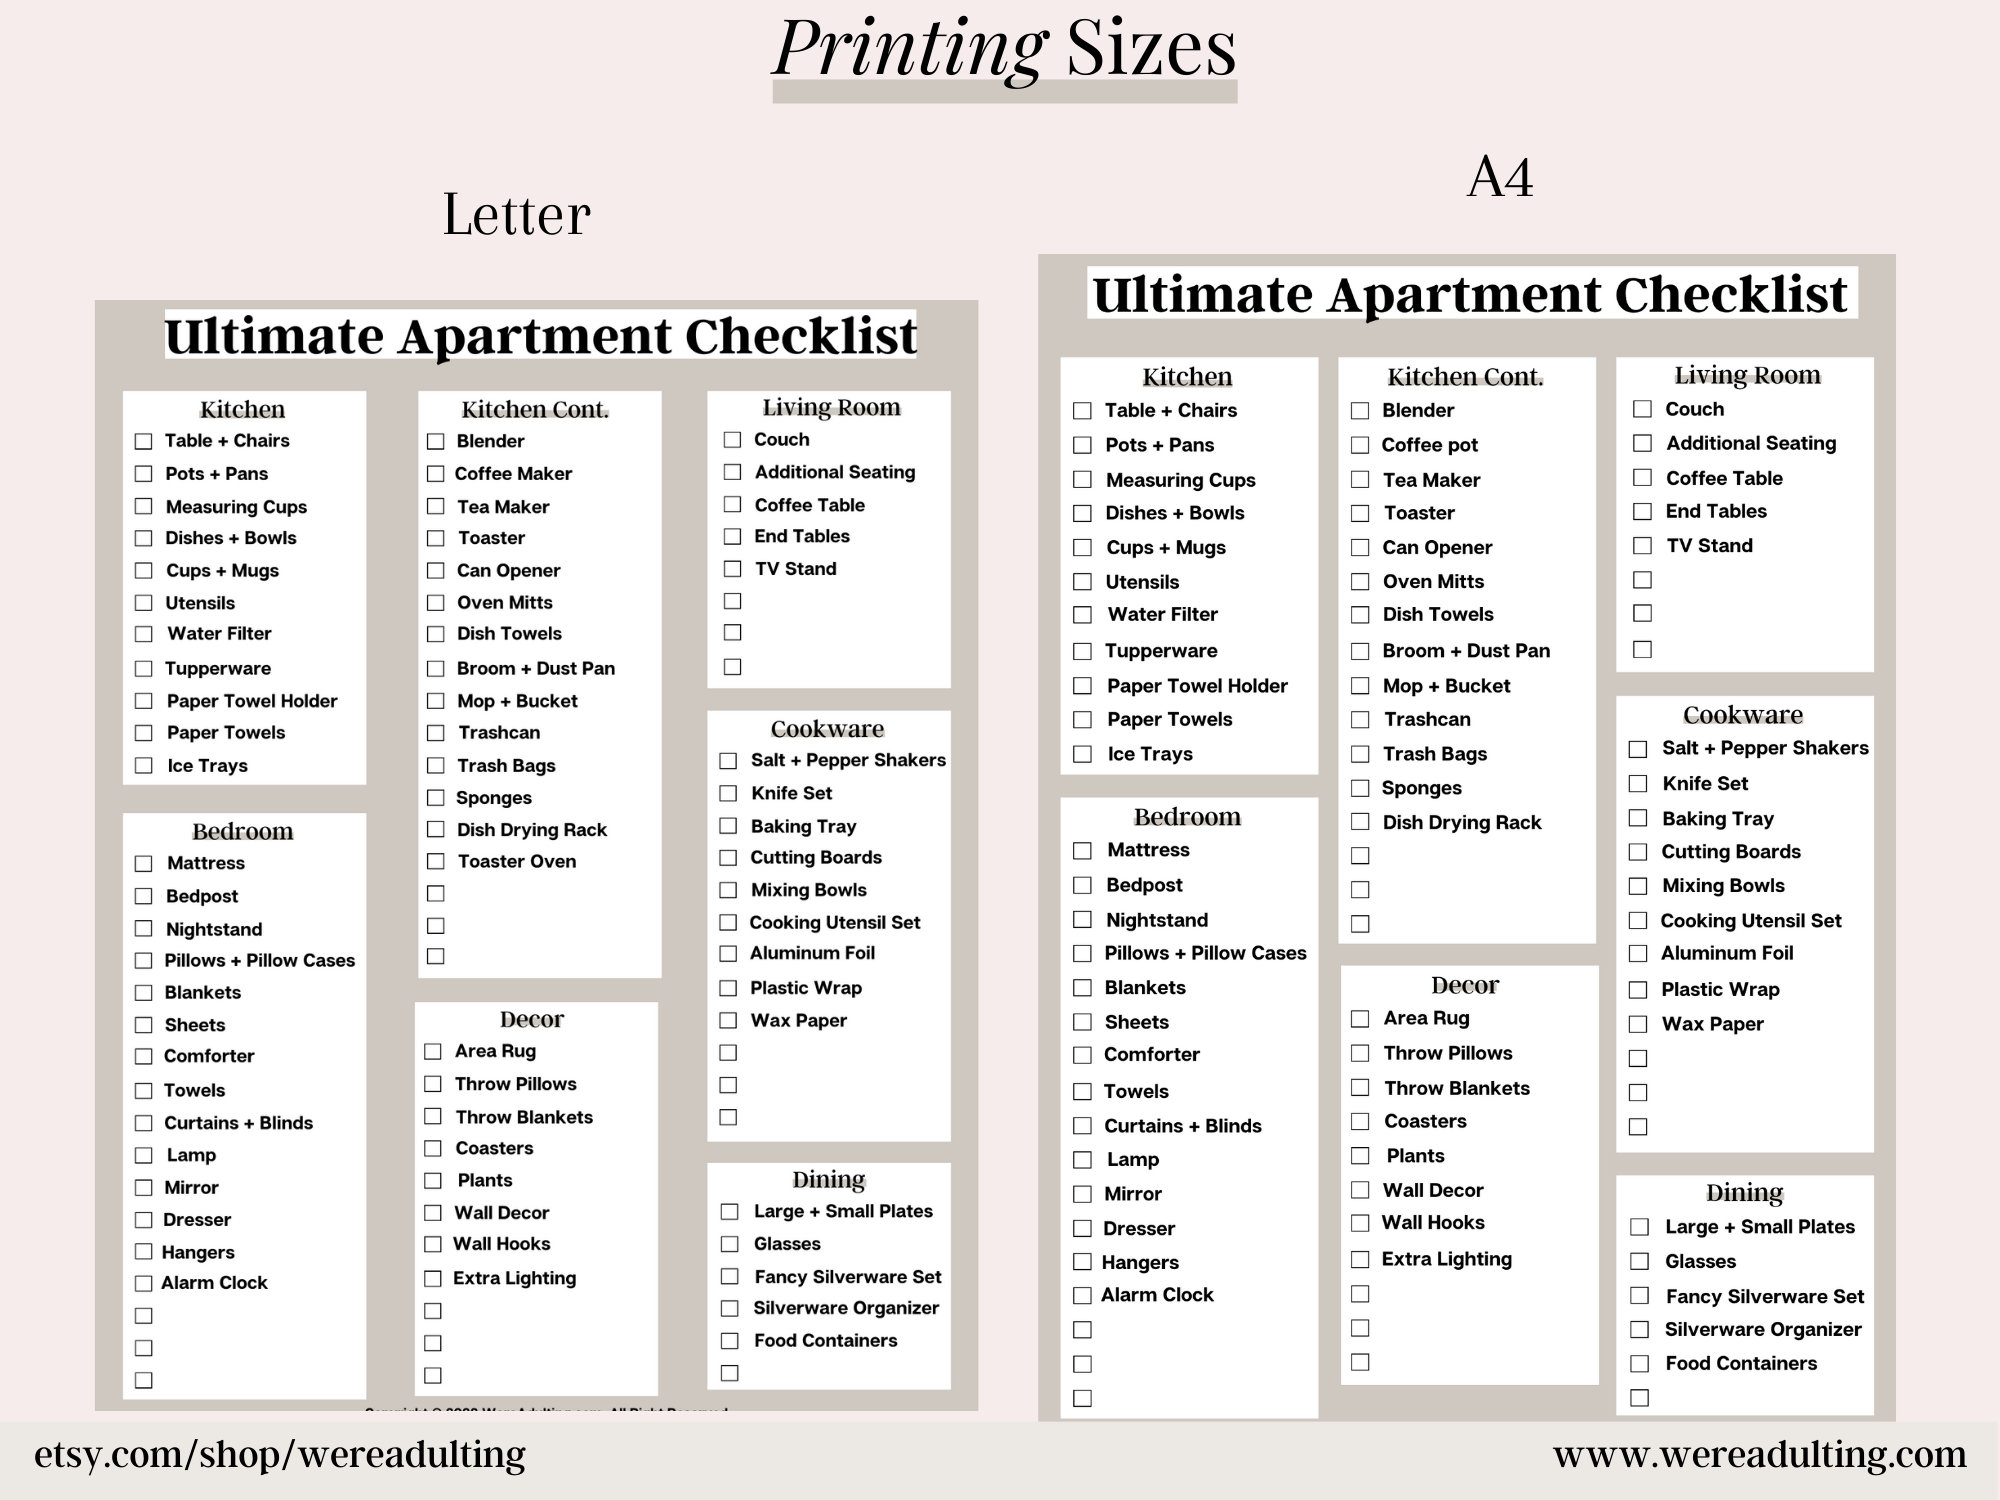 College Apartment Checklist